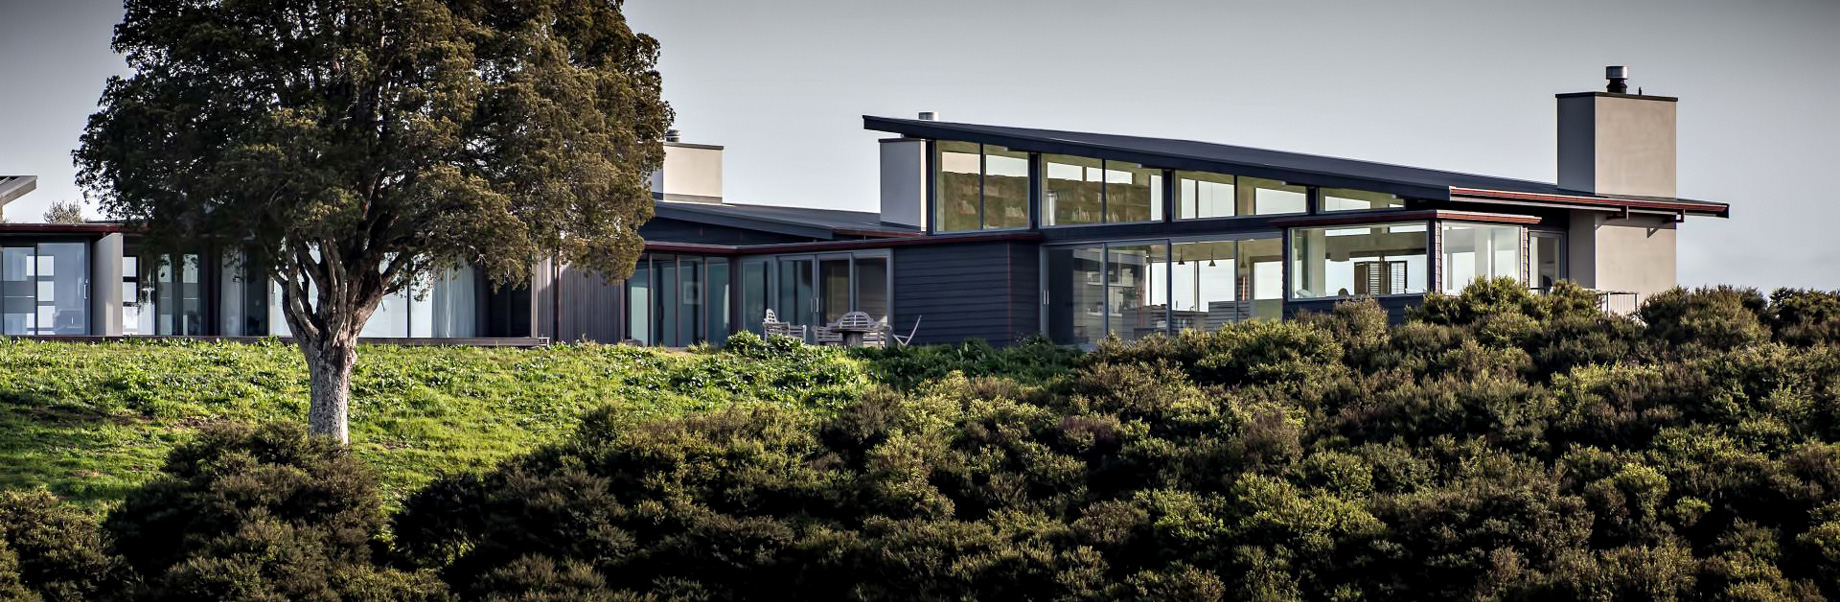 Woodside Bay Residence - Waiheke Island, Auckland, New Zealand